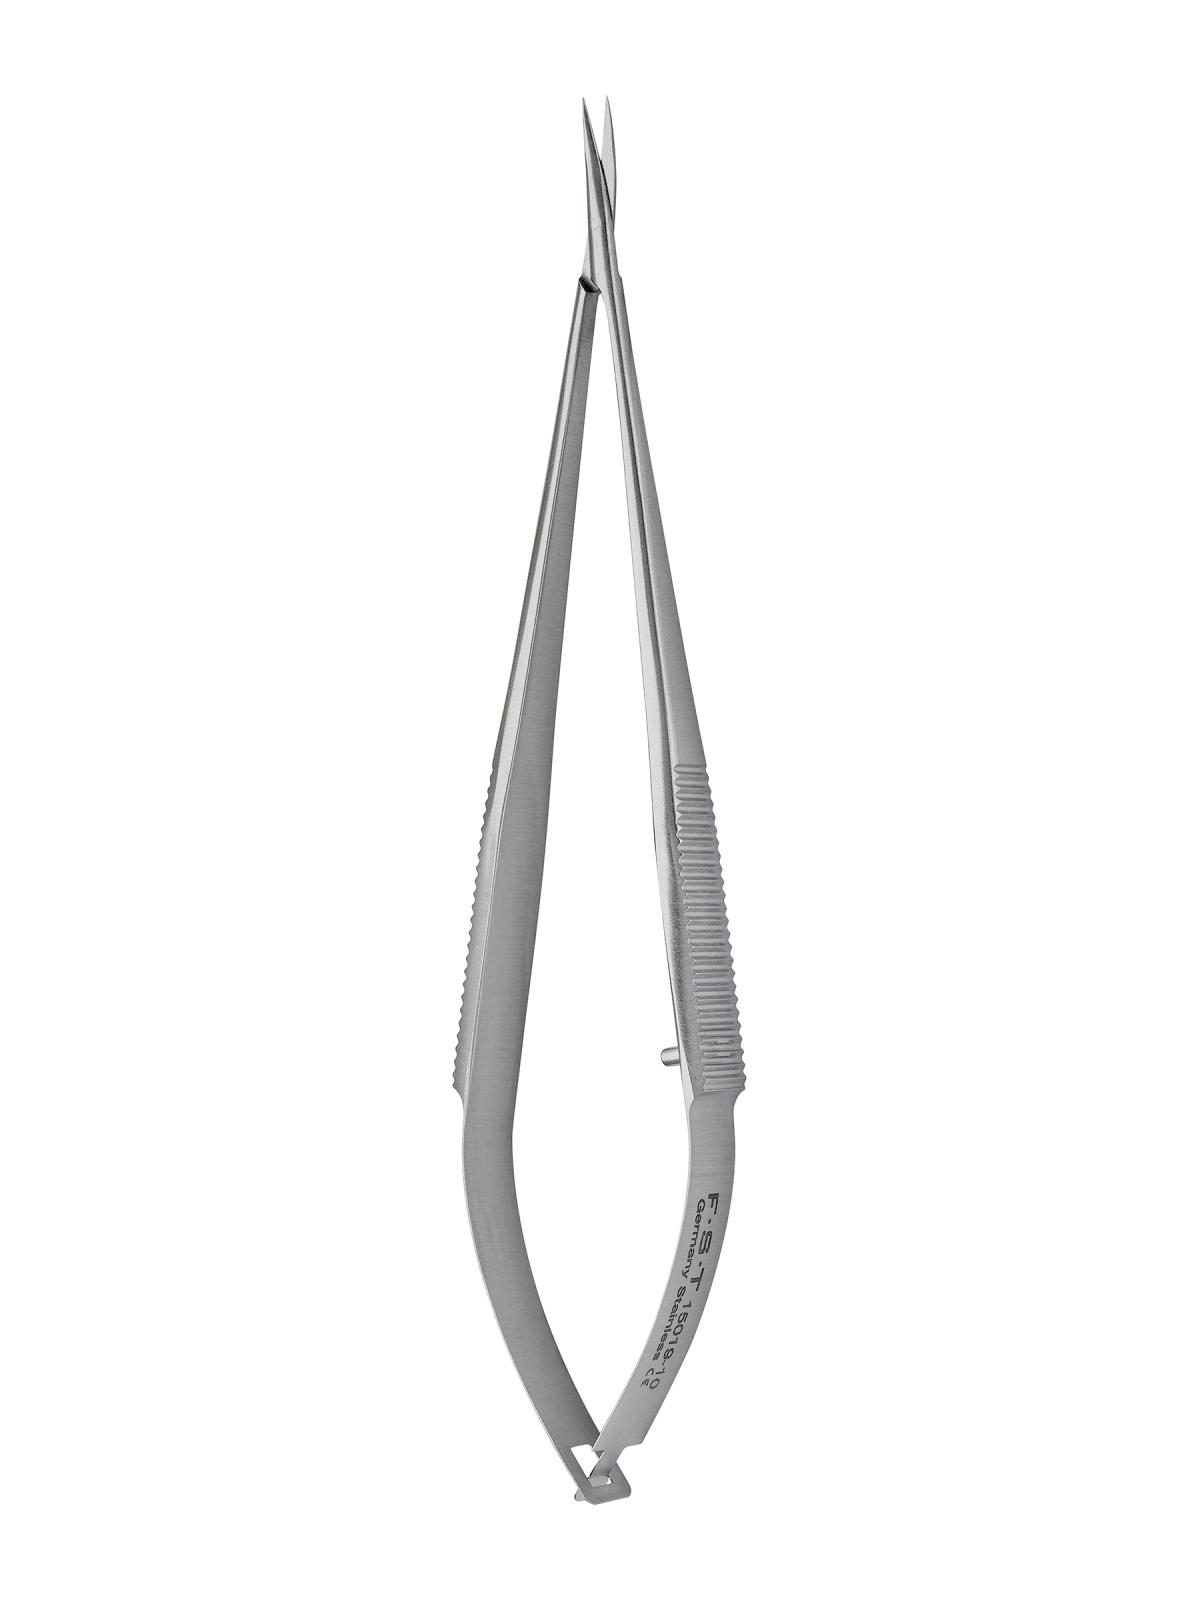 McPherson Vannas Spring Scissors, 9.0 cm, 45 Degree Angled Blunt Tips